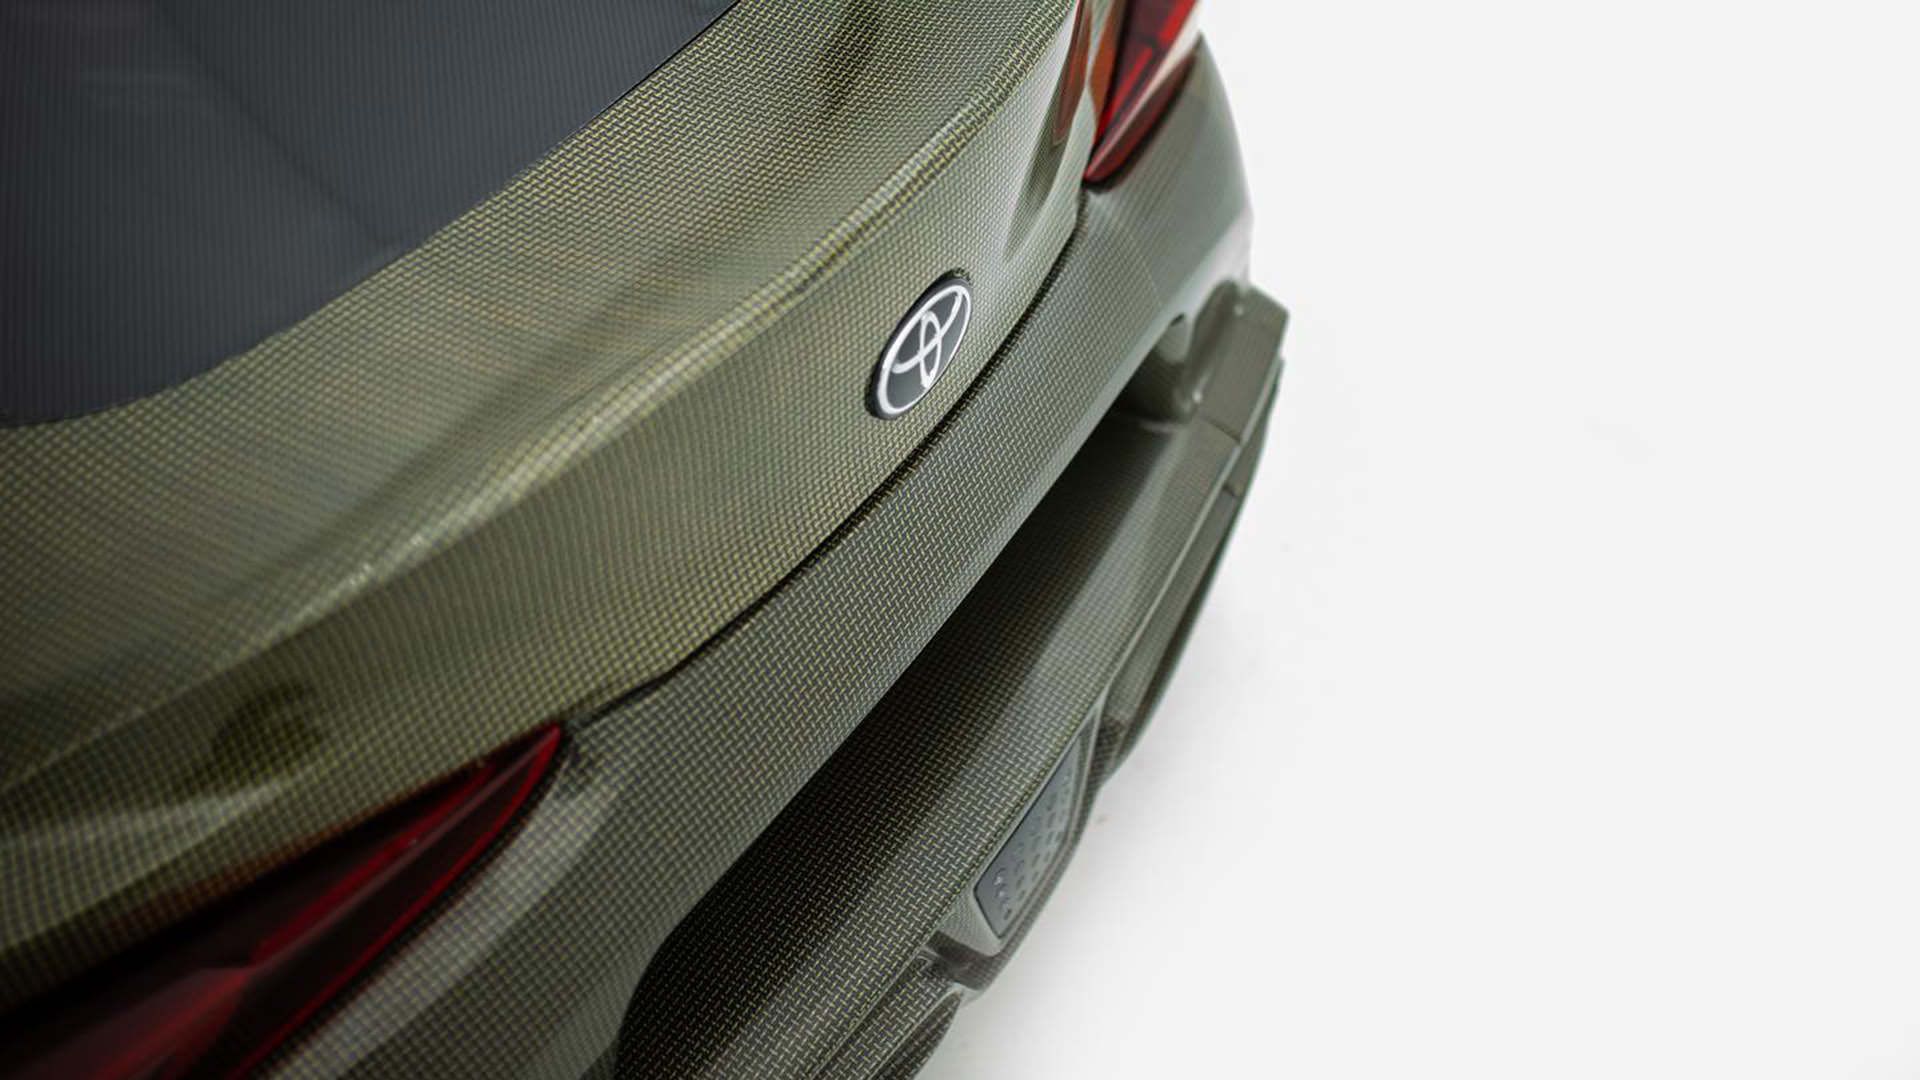 نمای بخش عقب تویوتا سوپرا دریفتر / Toyota Supra Drifter سبز رنگ